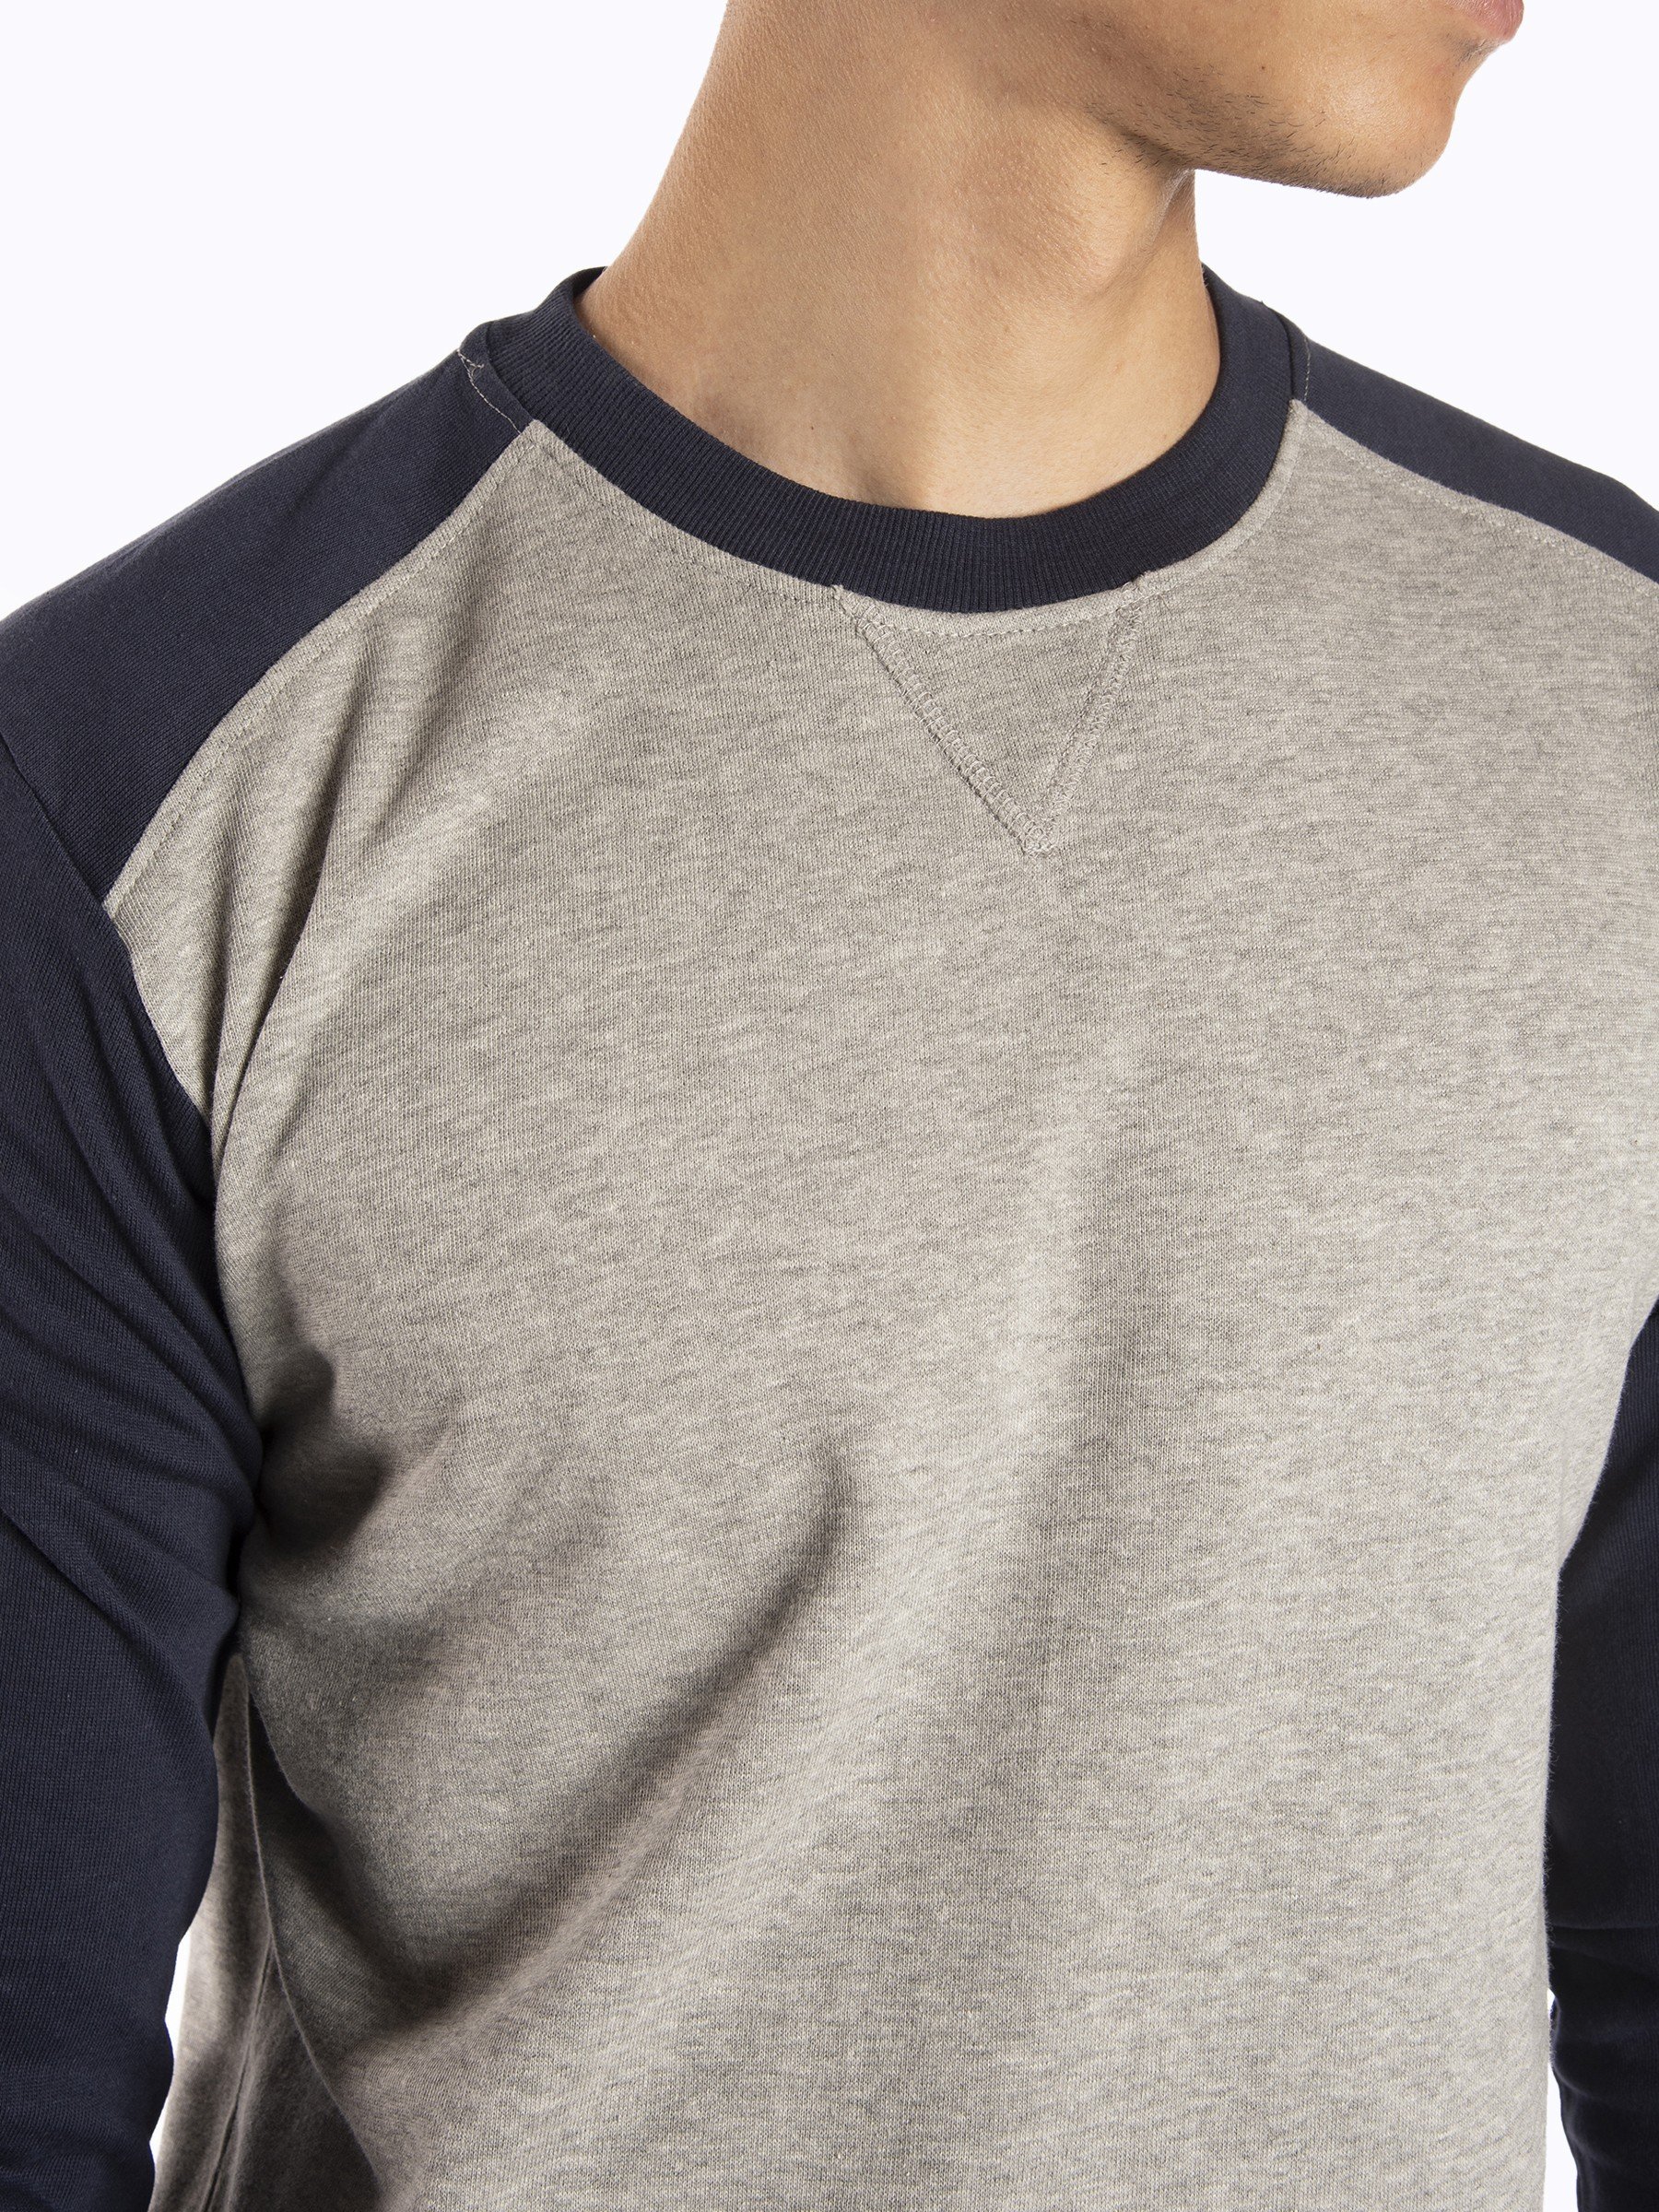 Sweatshirt with kangaroo GATE pocket and | sleeves contrast